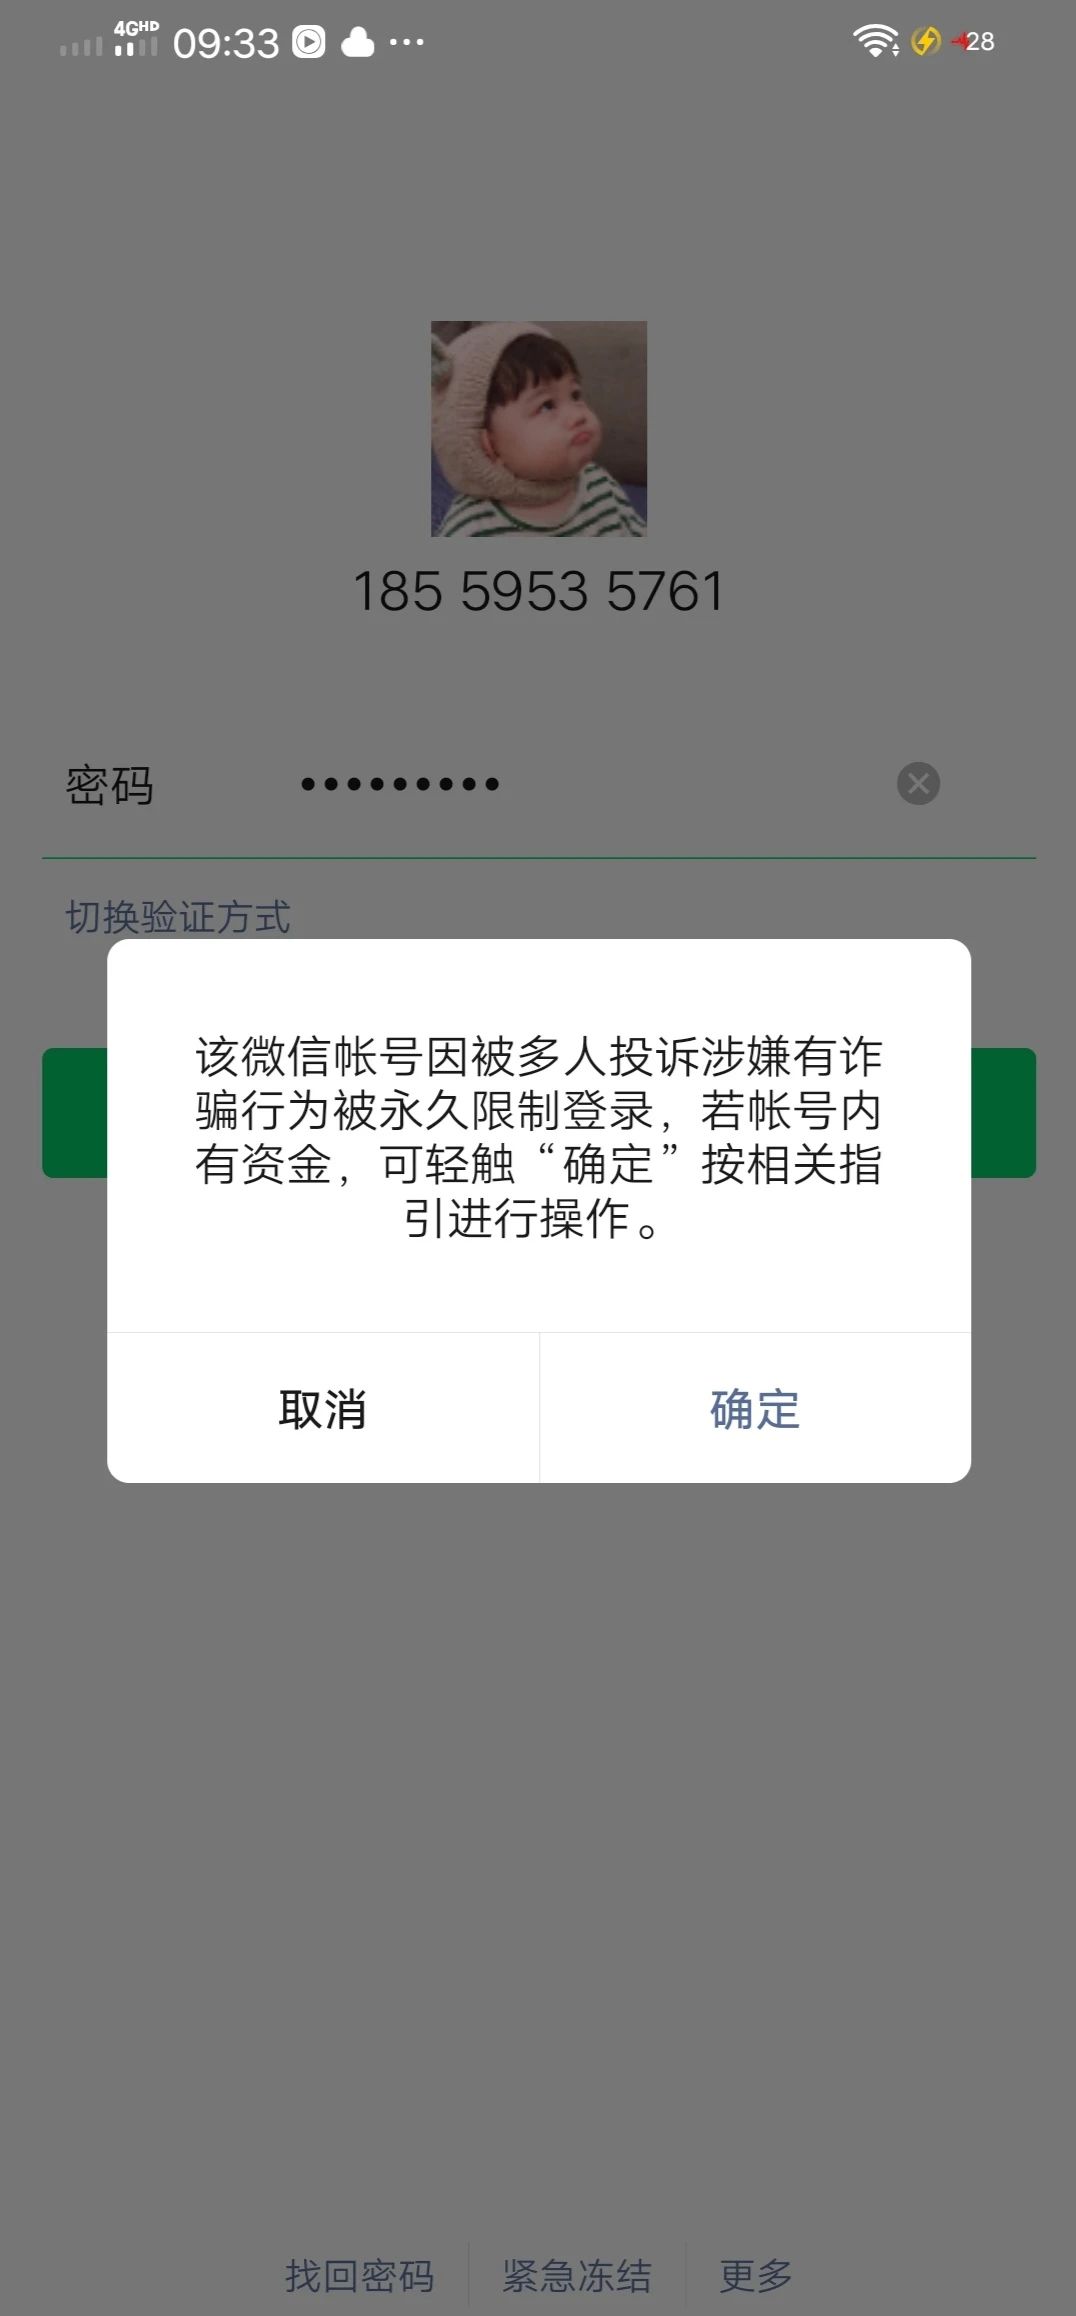 QQ被举报风险解除工具 亲测 - AE博客|墨渊